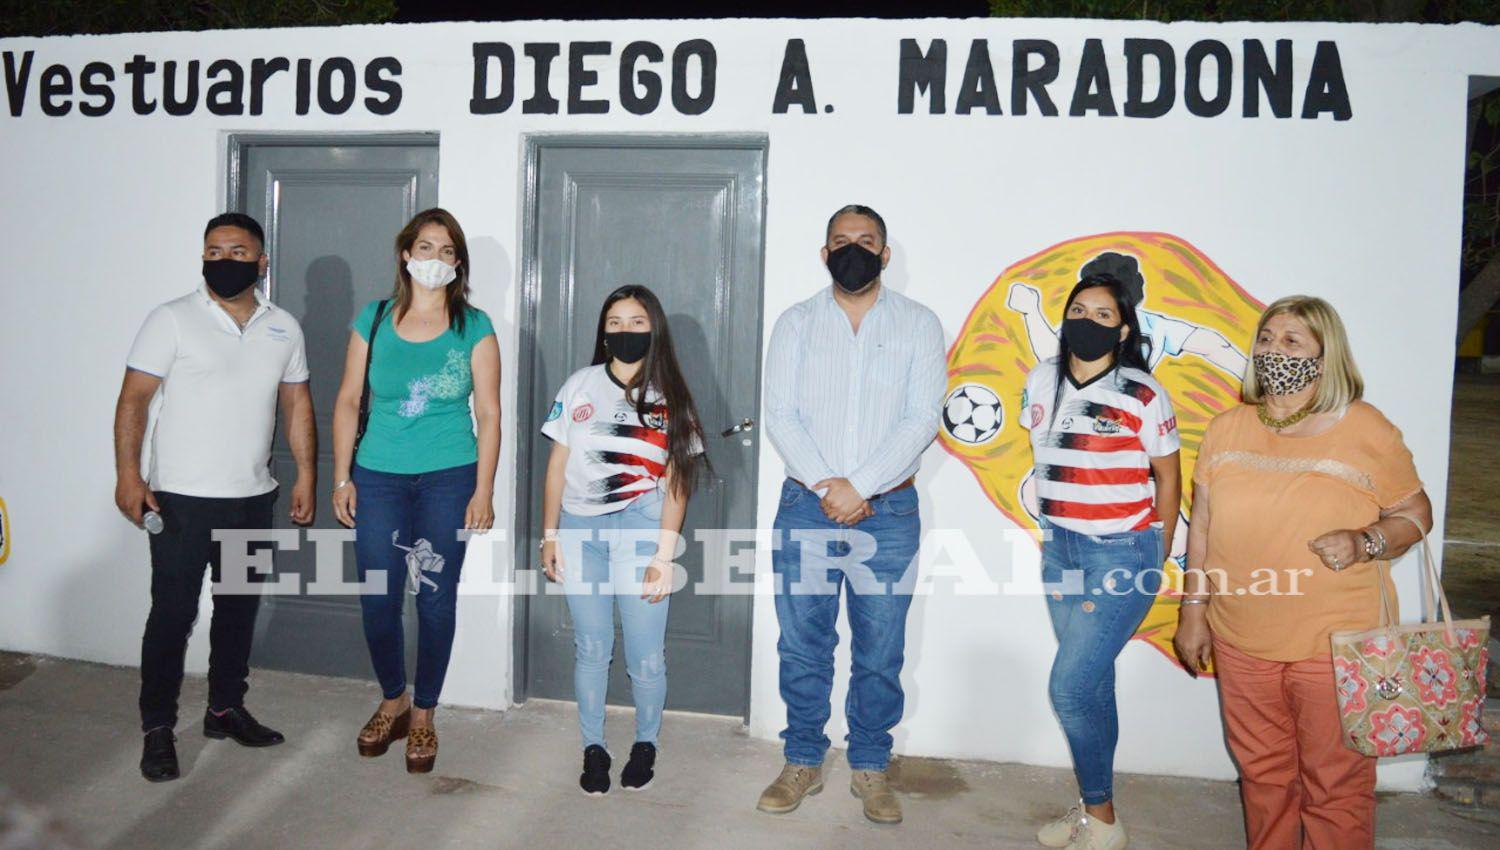 El Papi Fuacutetbol de Friacuteas habilitoacute vestuarios en honor a Diego Maradona